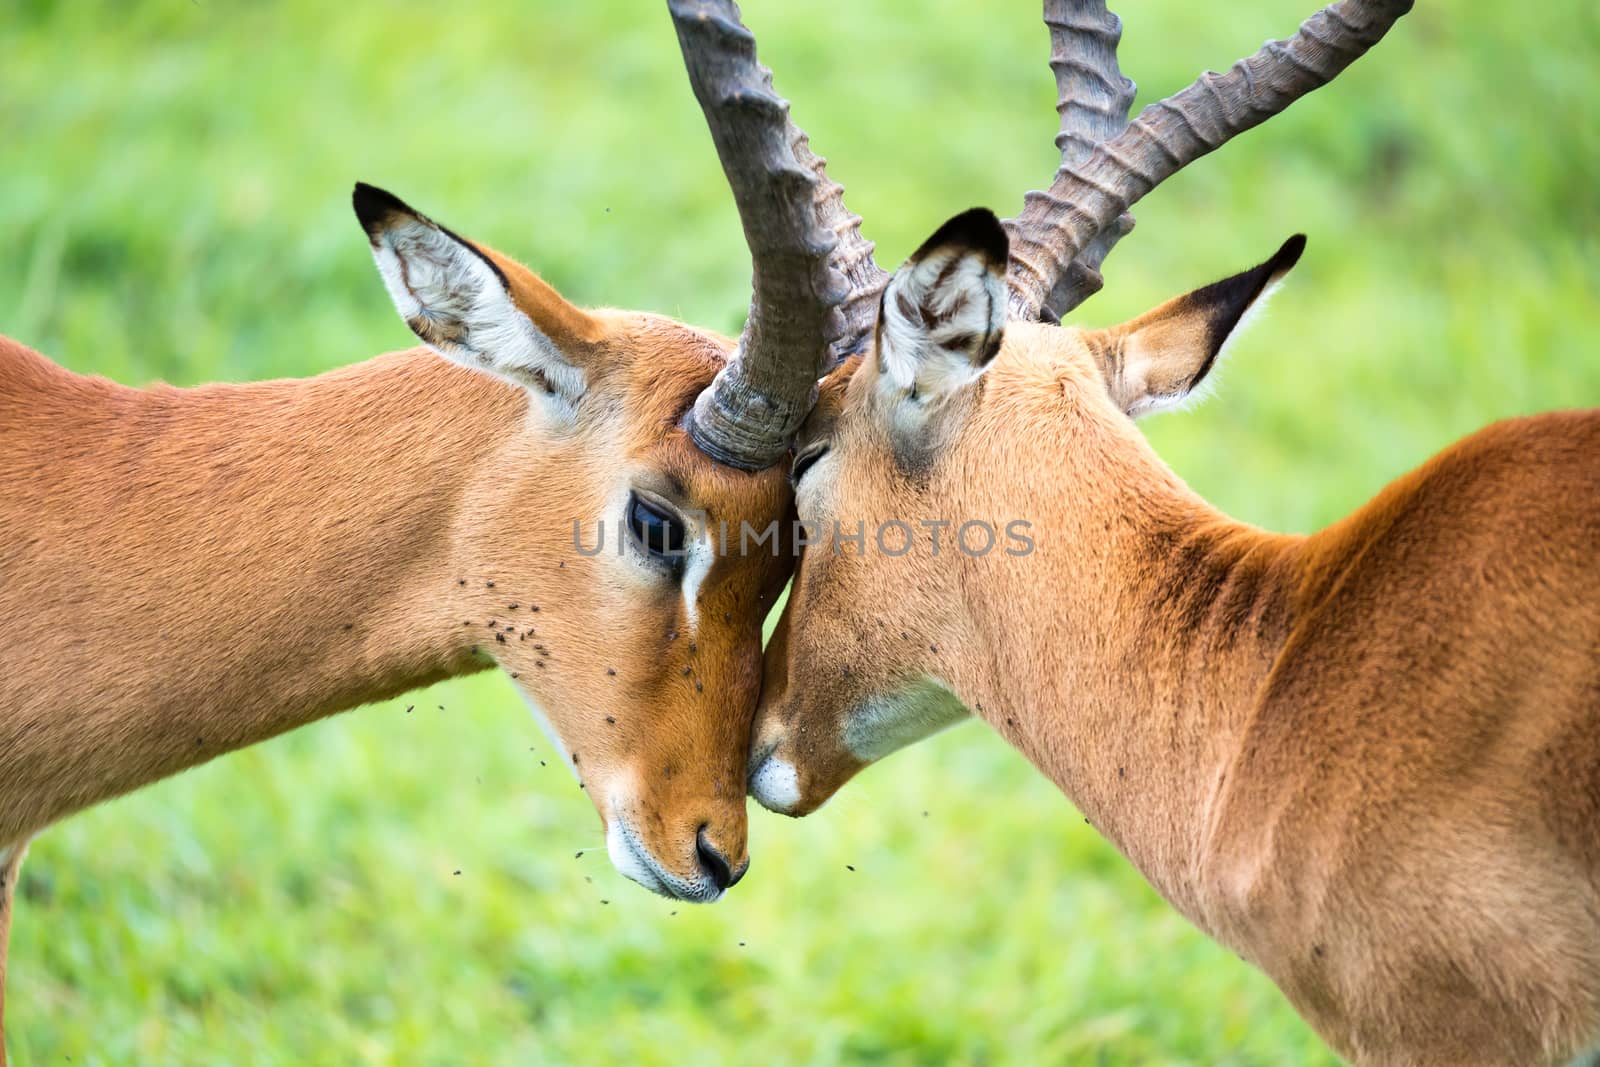 An Impala family on a grass landscape in the Kenyan savannah